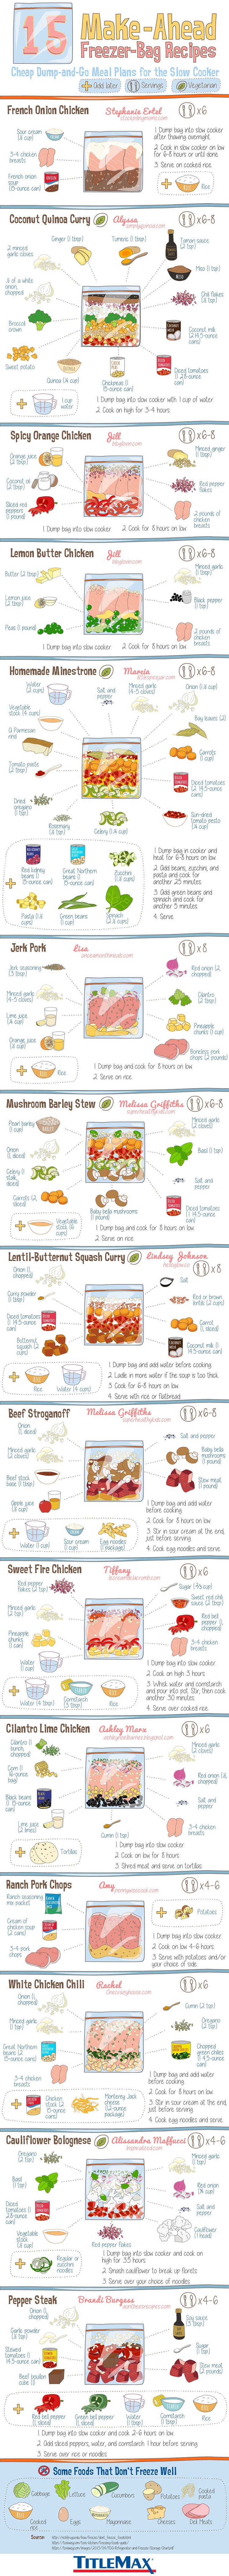 15 Make-Ahead Freezer Bag Meal Recipes #infographic